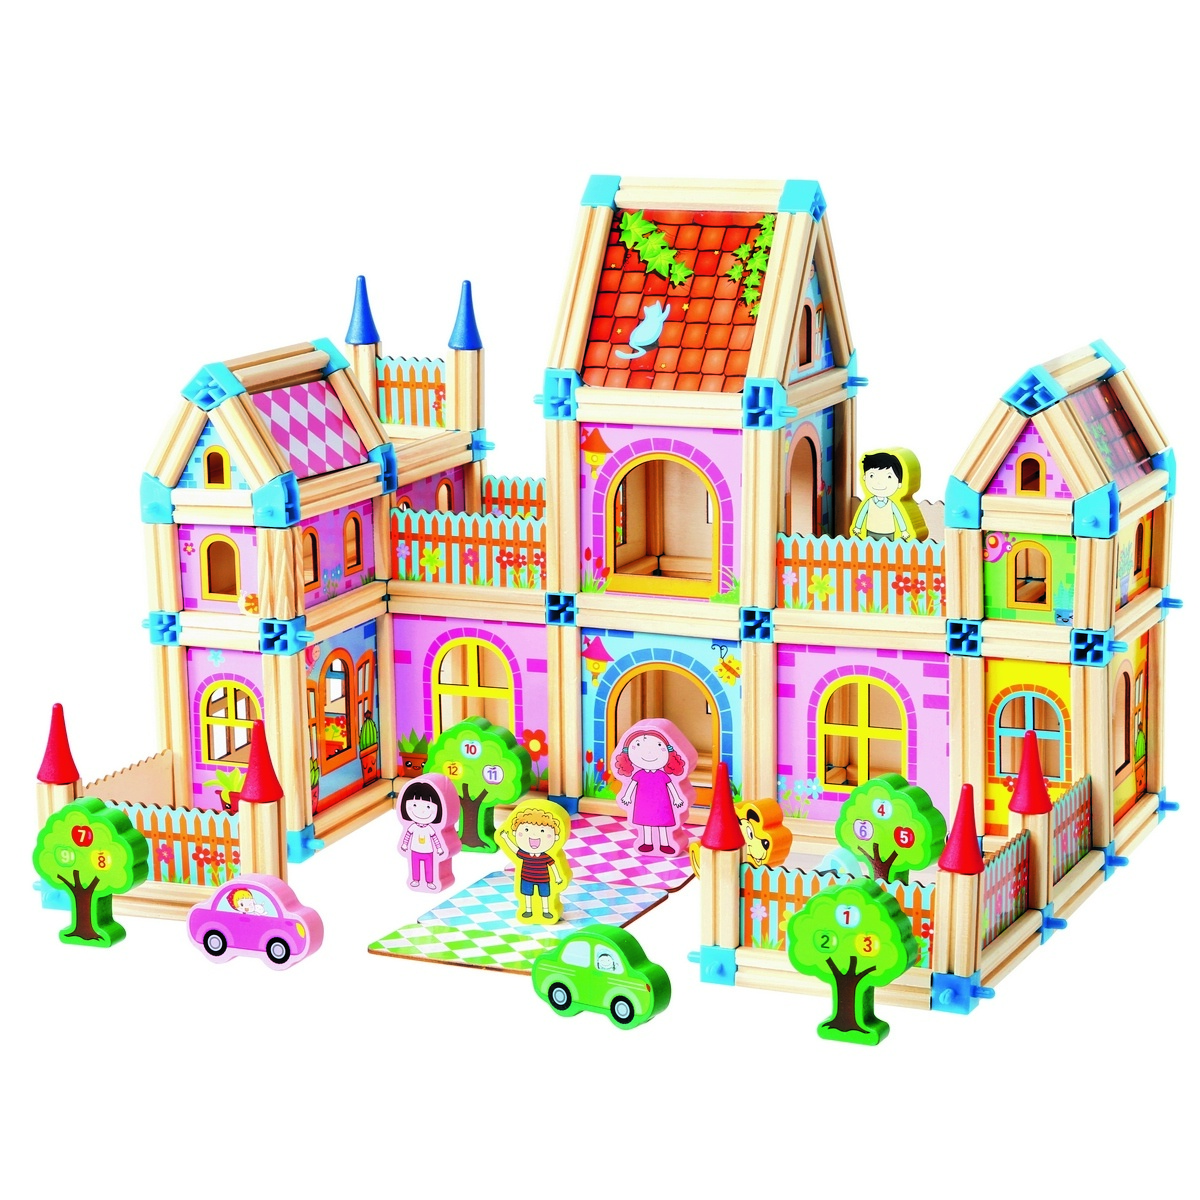 Joc modular din lemn Mertens Castel mare, 268 piese